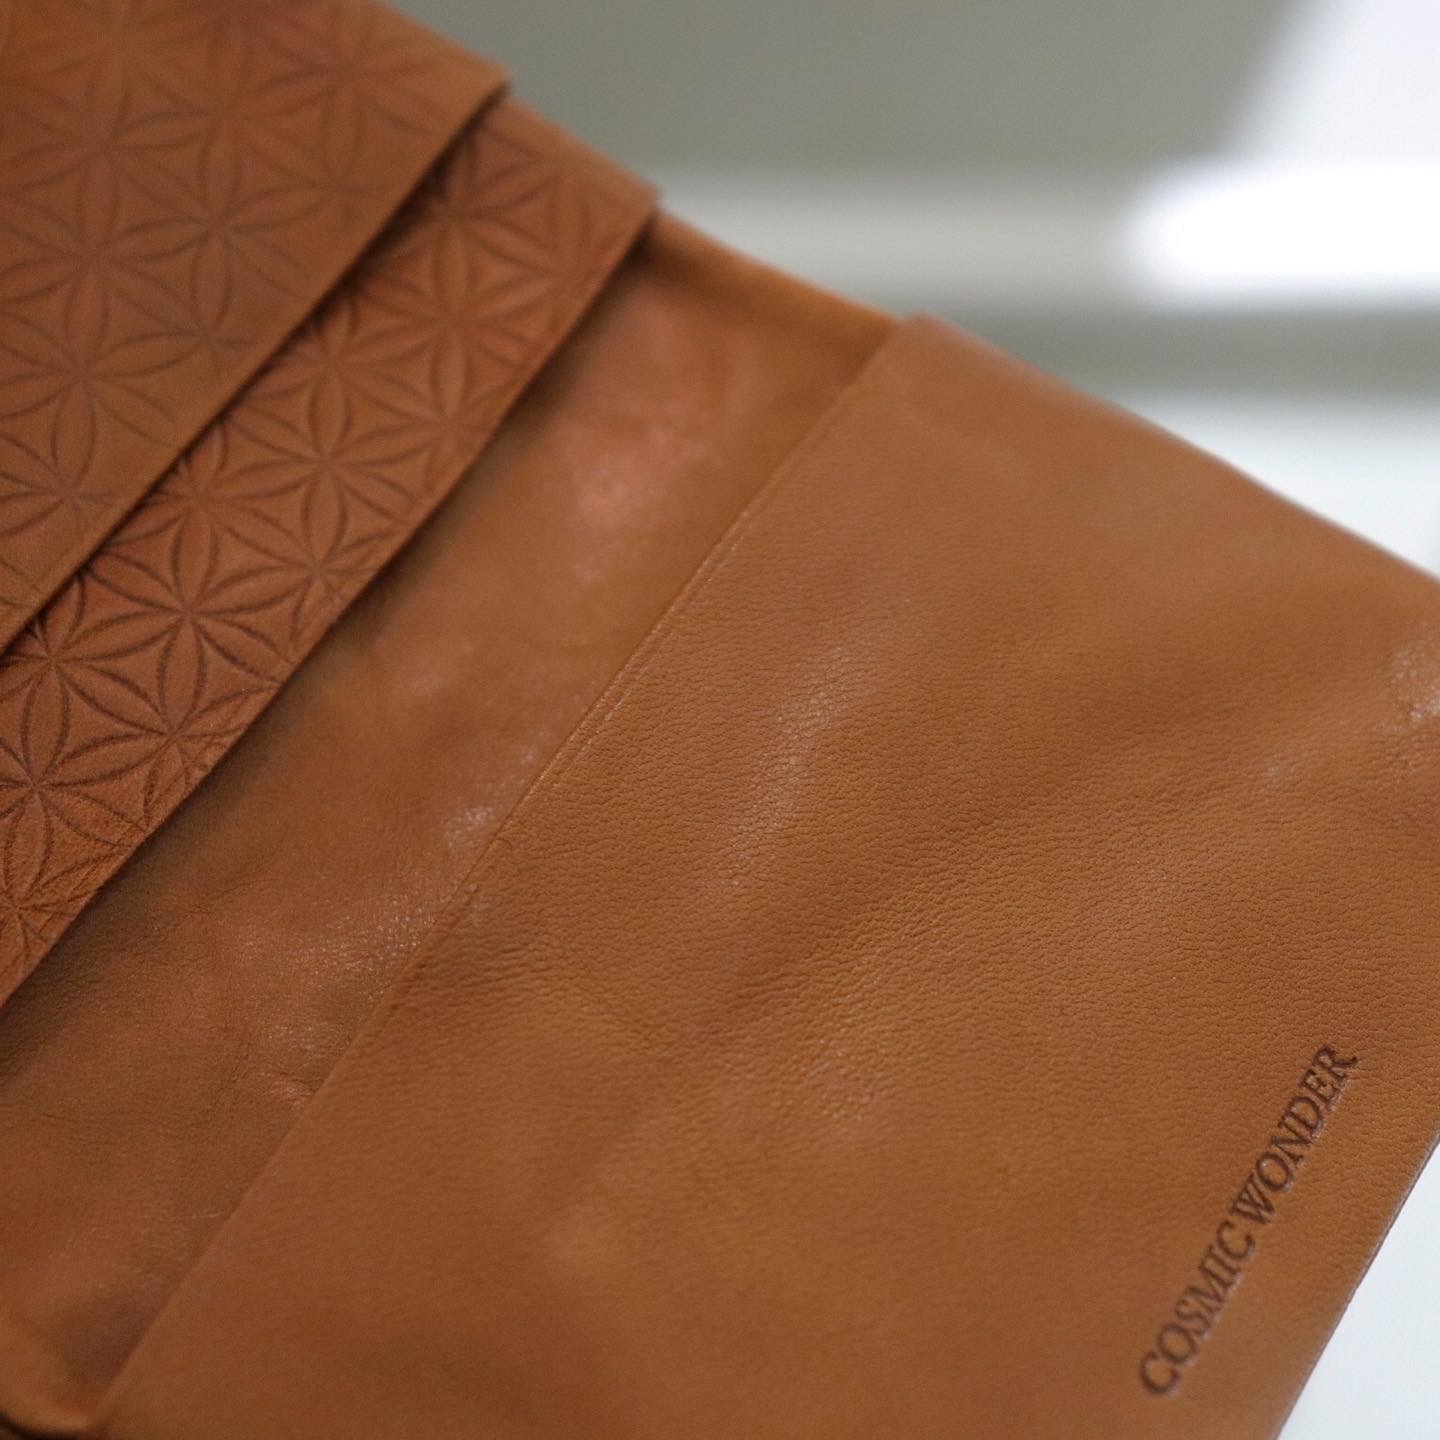 cosmicwonder tanned leather クラッチバッグ牛革 - 長財布